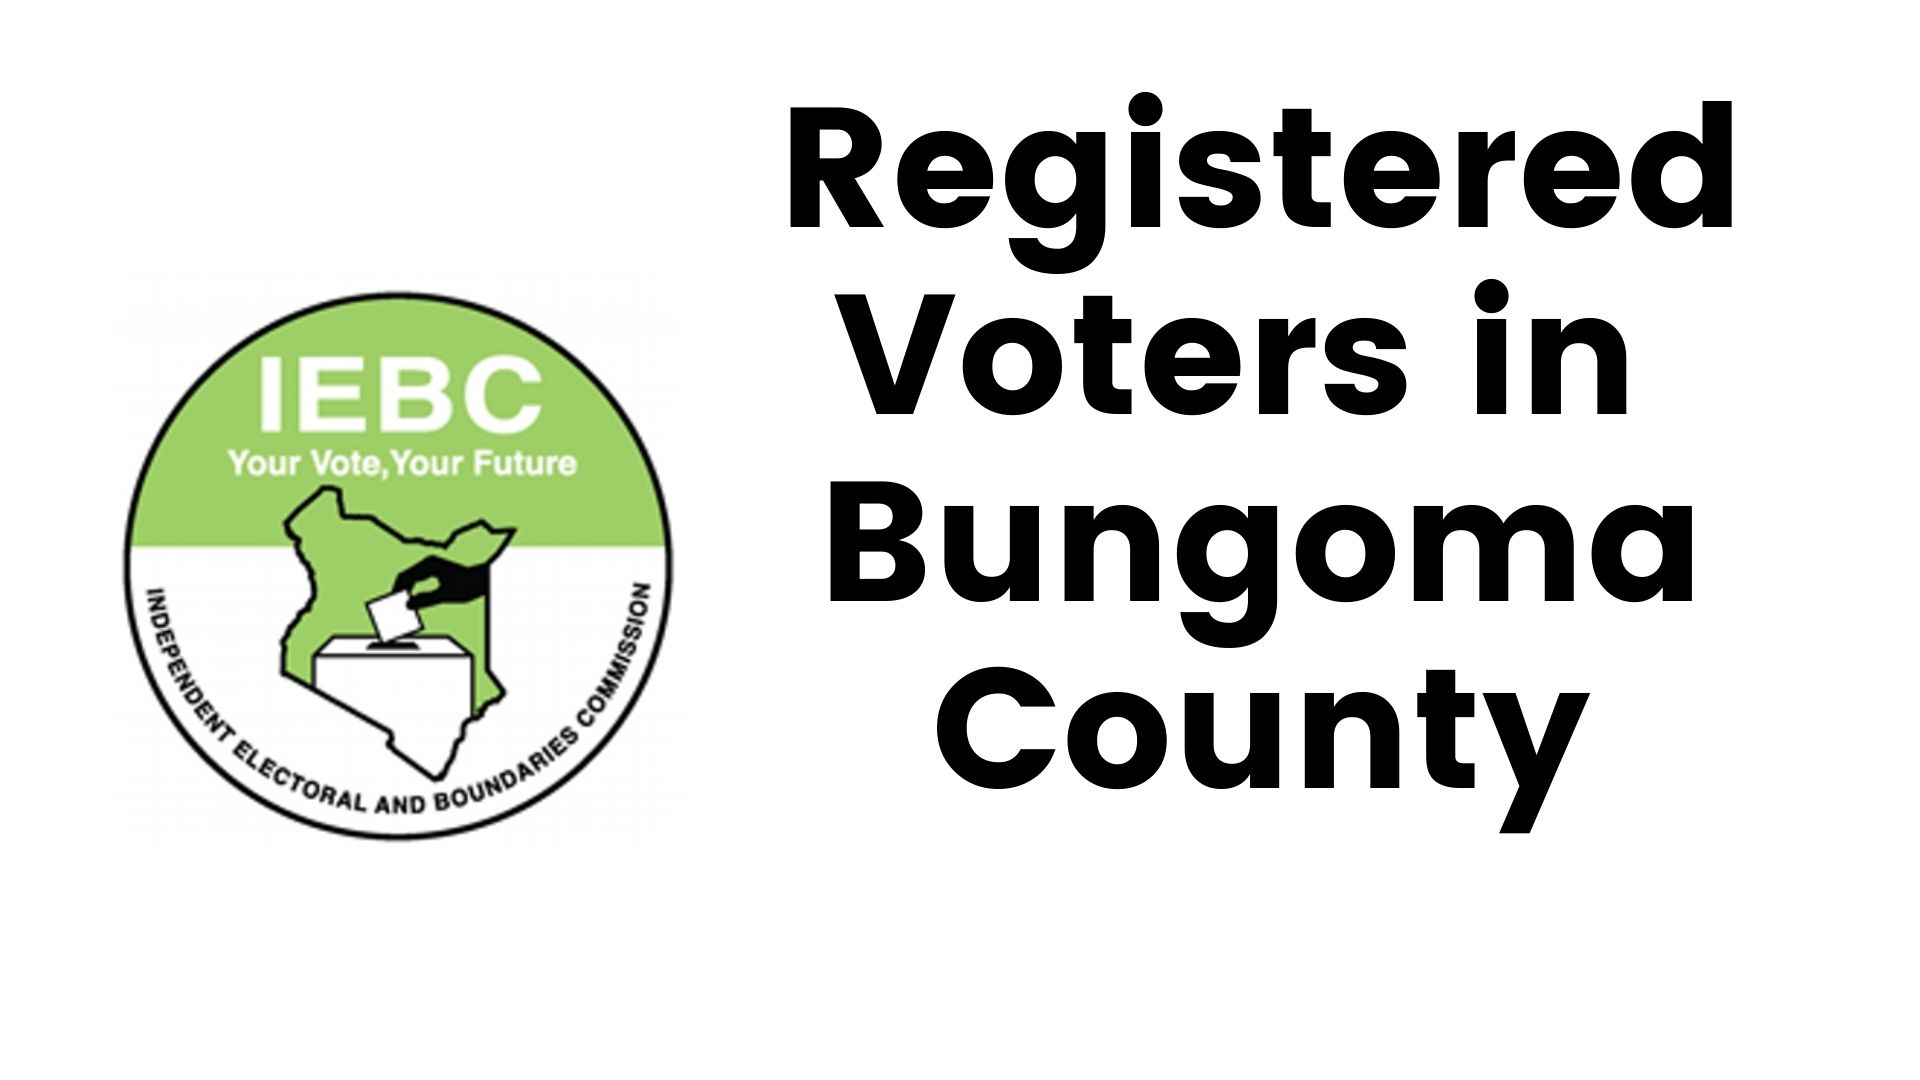 IEBC Bungoma County Registered Voters